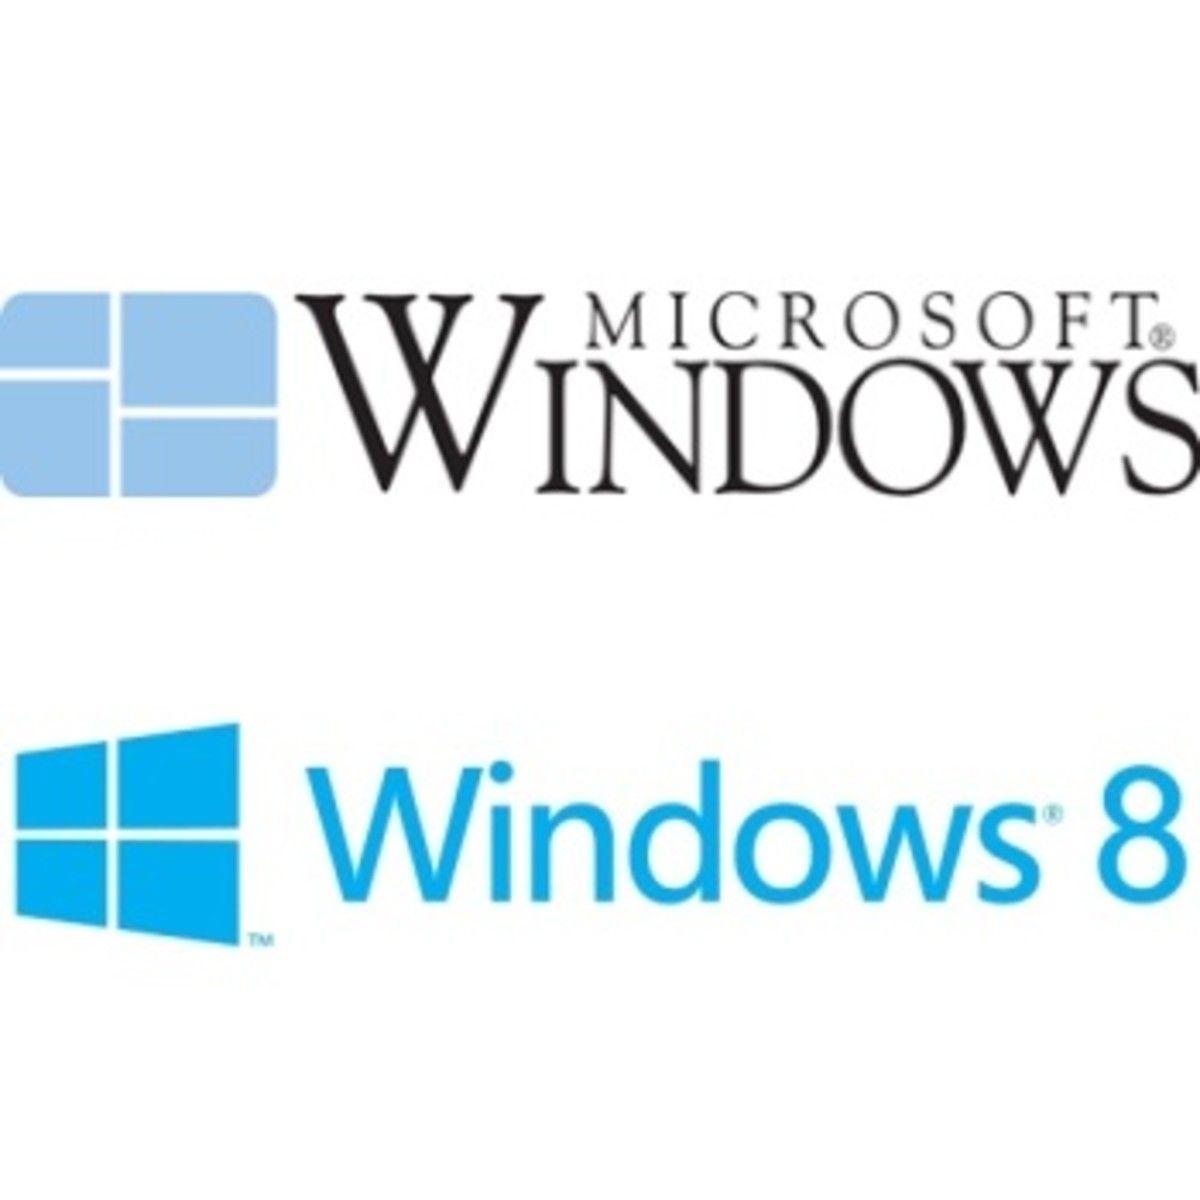 Windows 3.1 Logo - Microsoft unveils Windows 8 logo